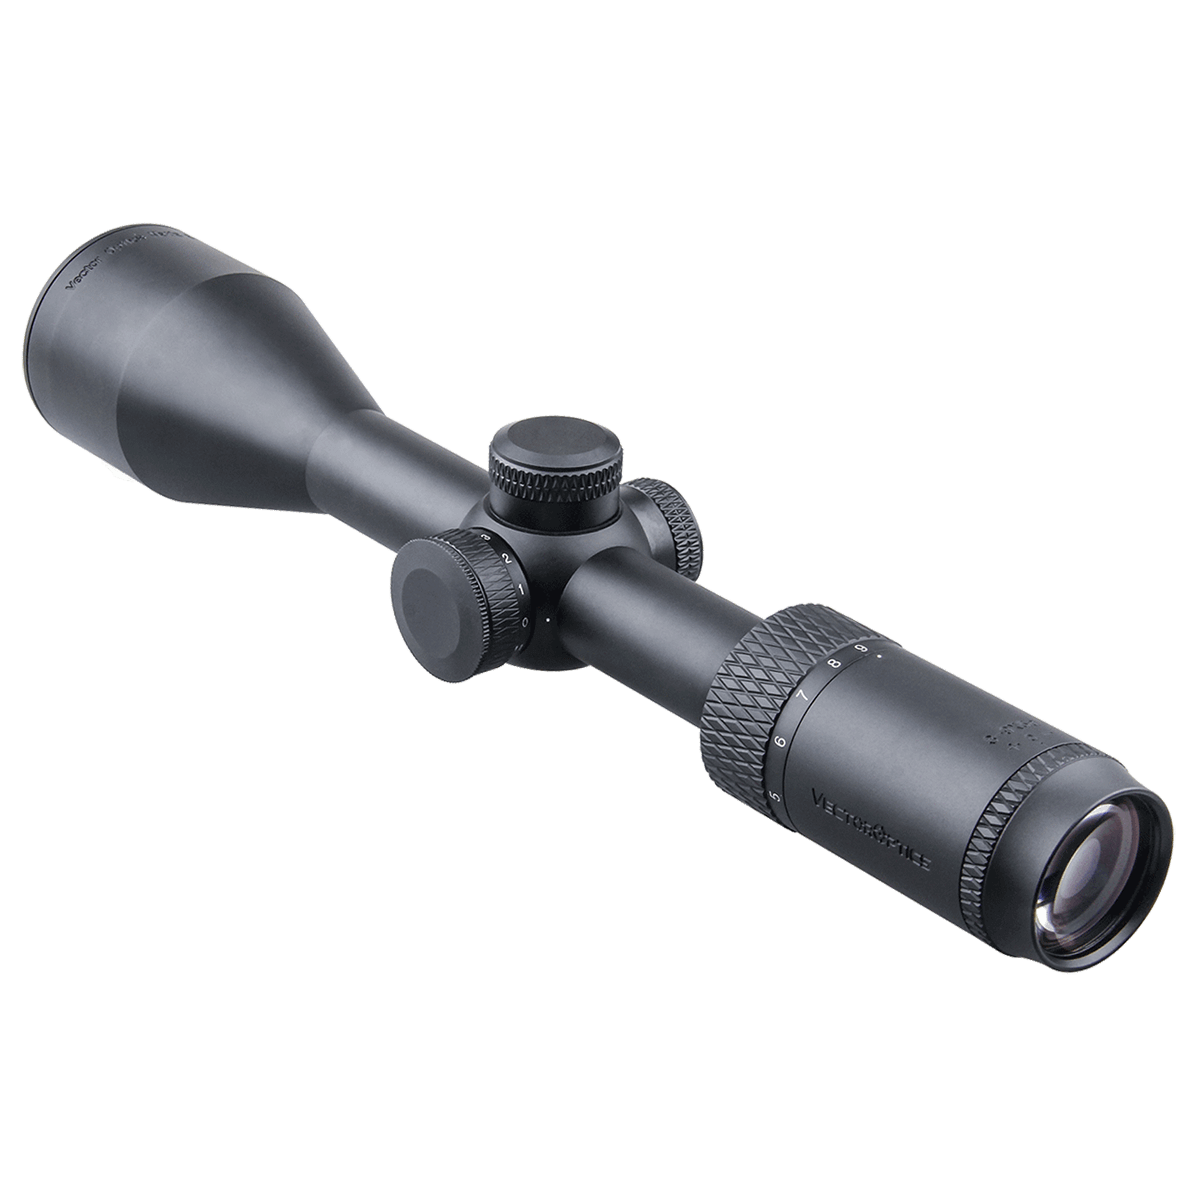 Matiz 3-9x50SFP Riflescope